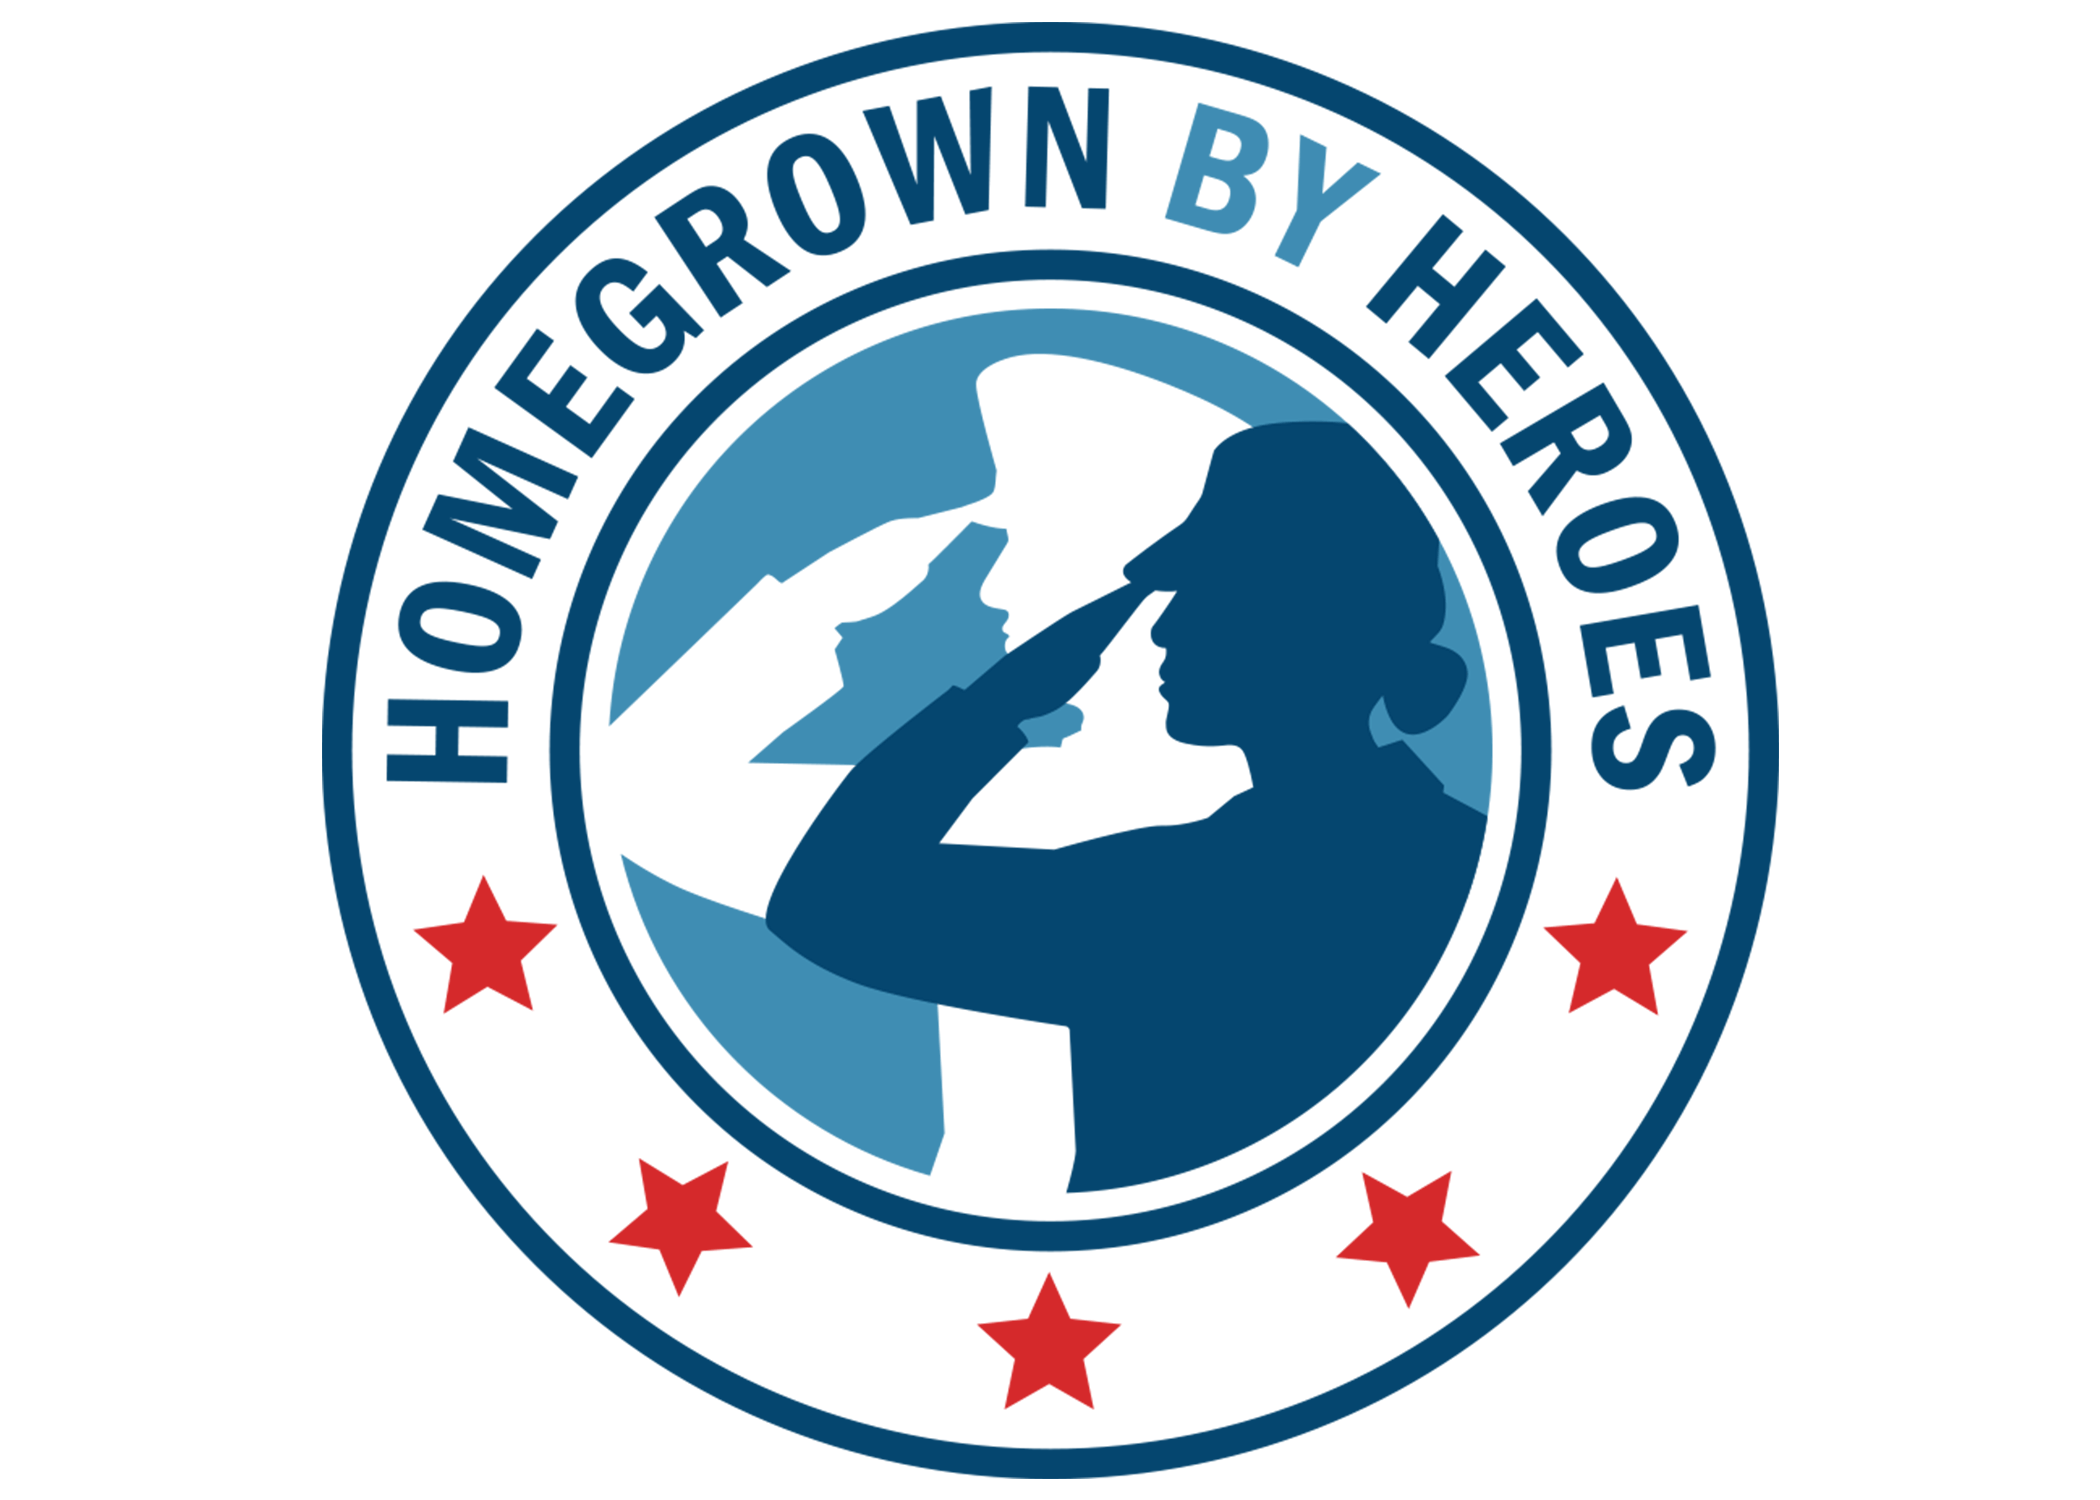 Veterans Logo - Homegrown By Heroes Label Unveils New Logo - FARMER VETERAN COALITION